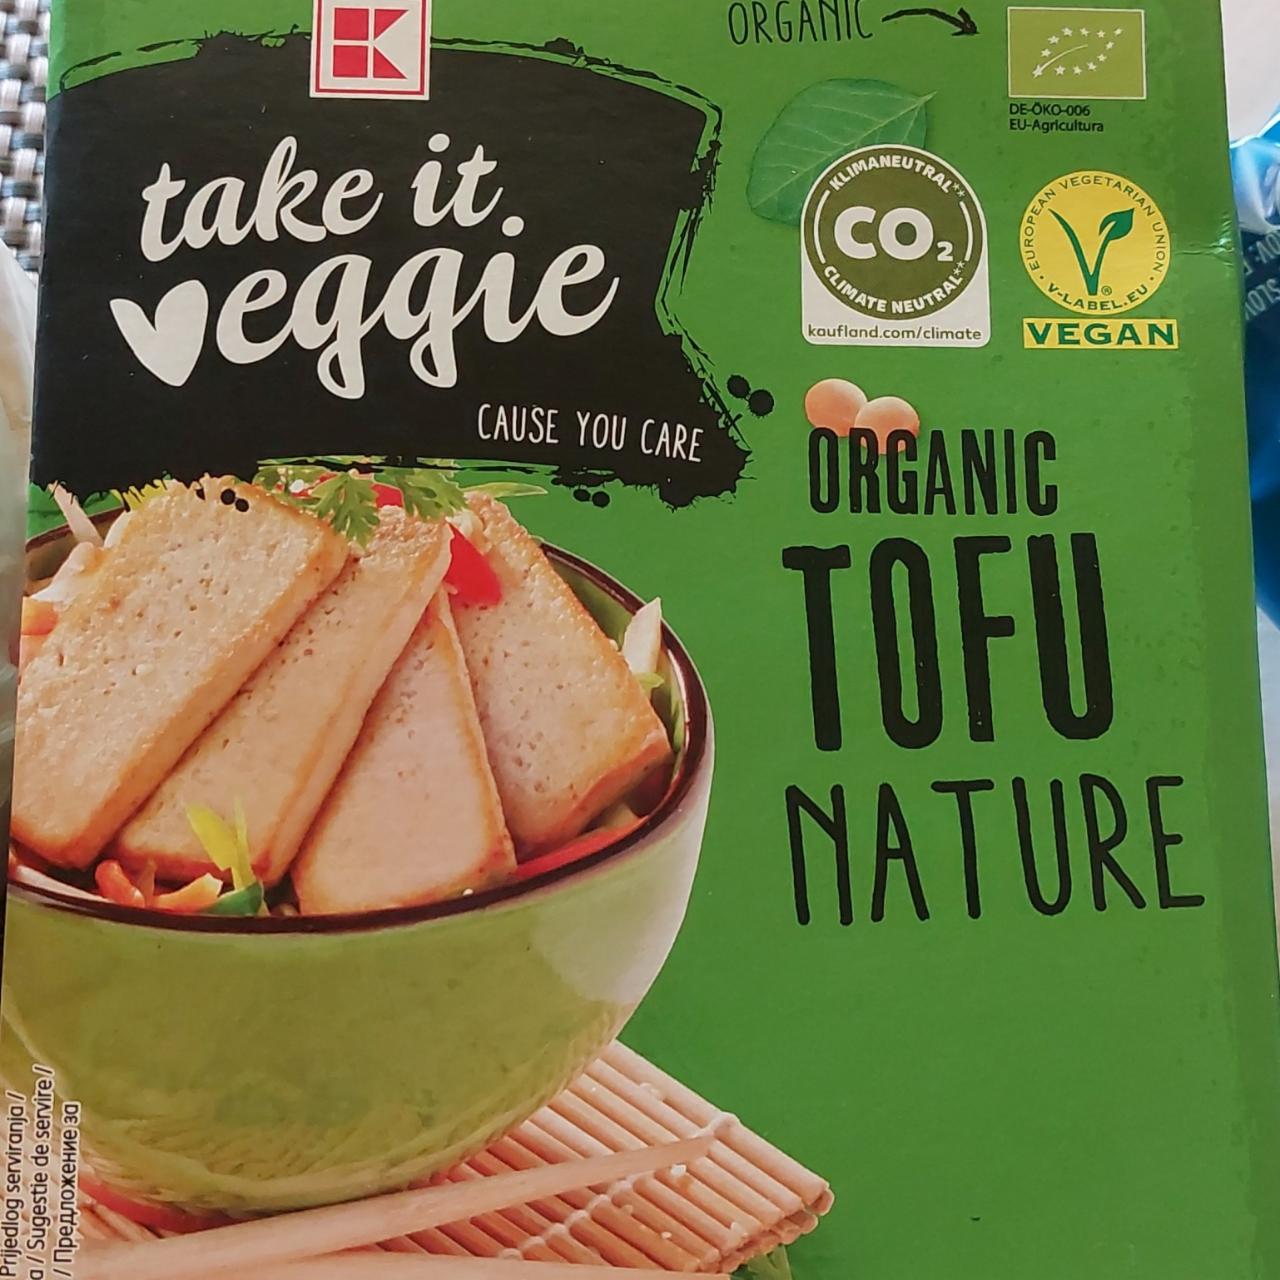 Képek - Natúr tofu Take it veggie